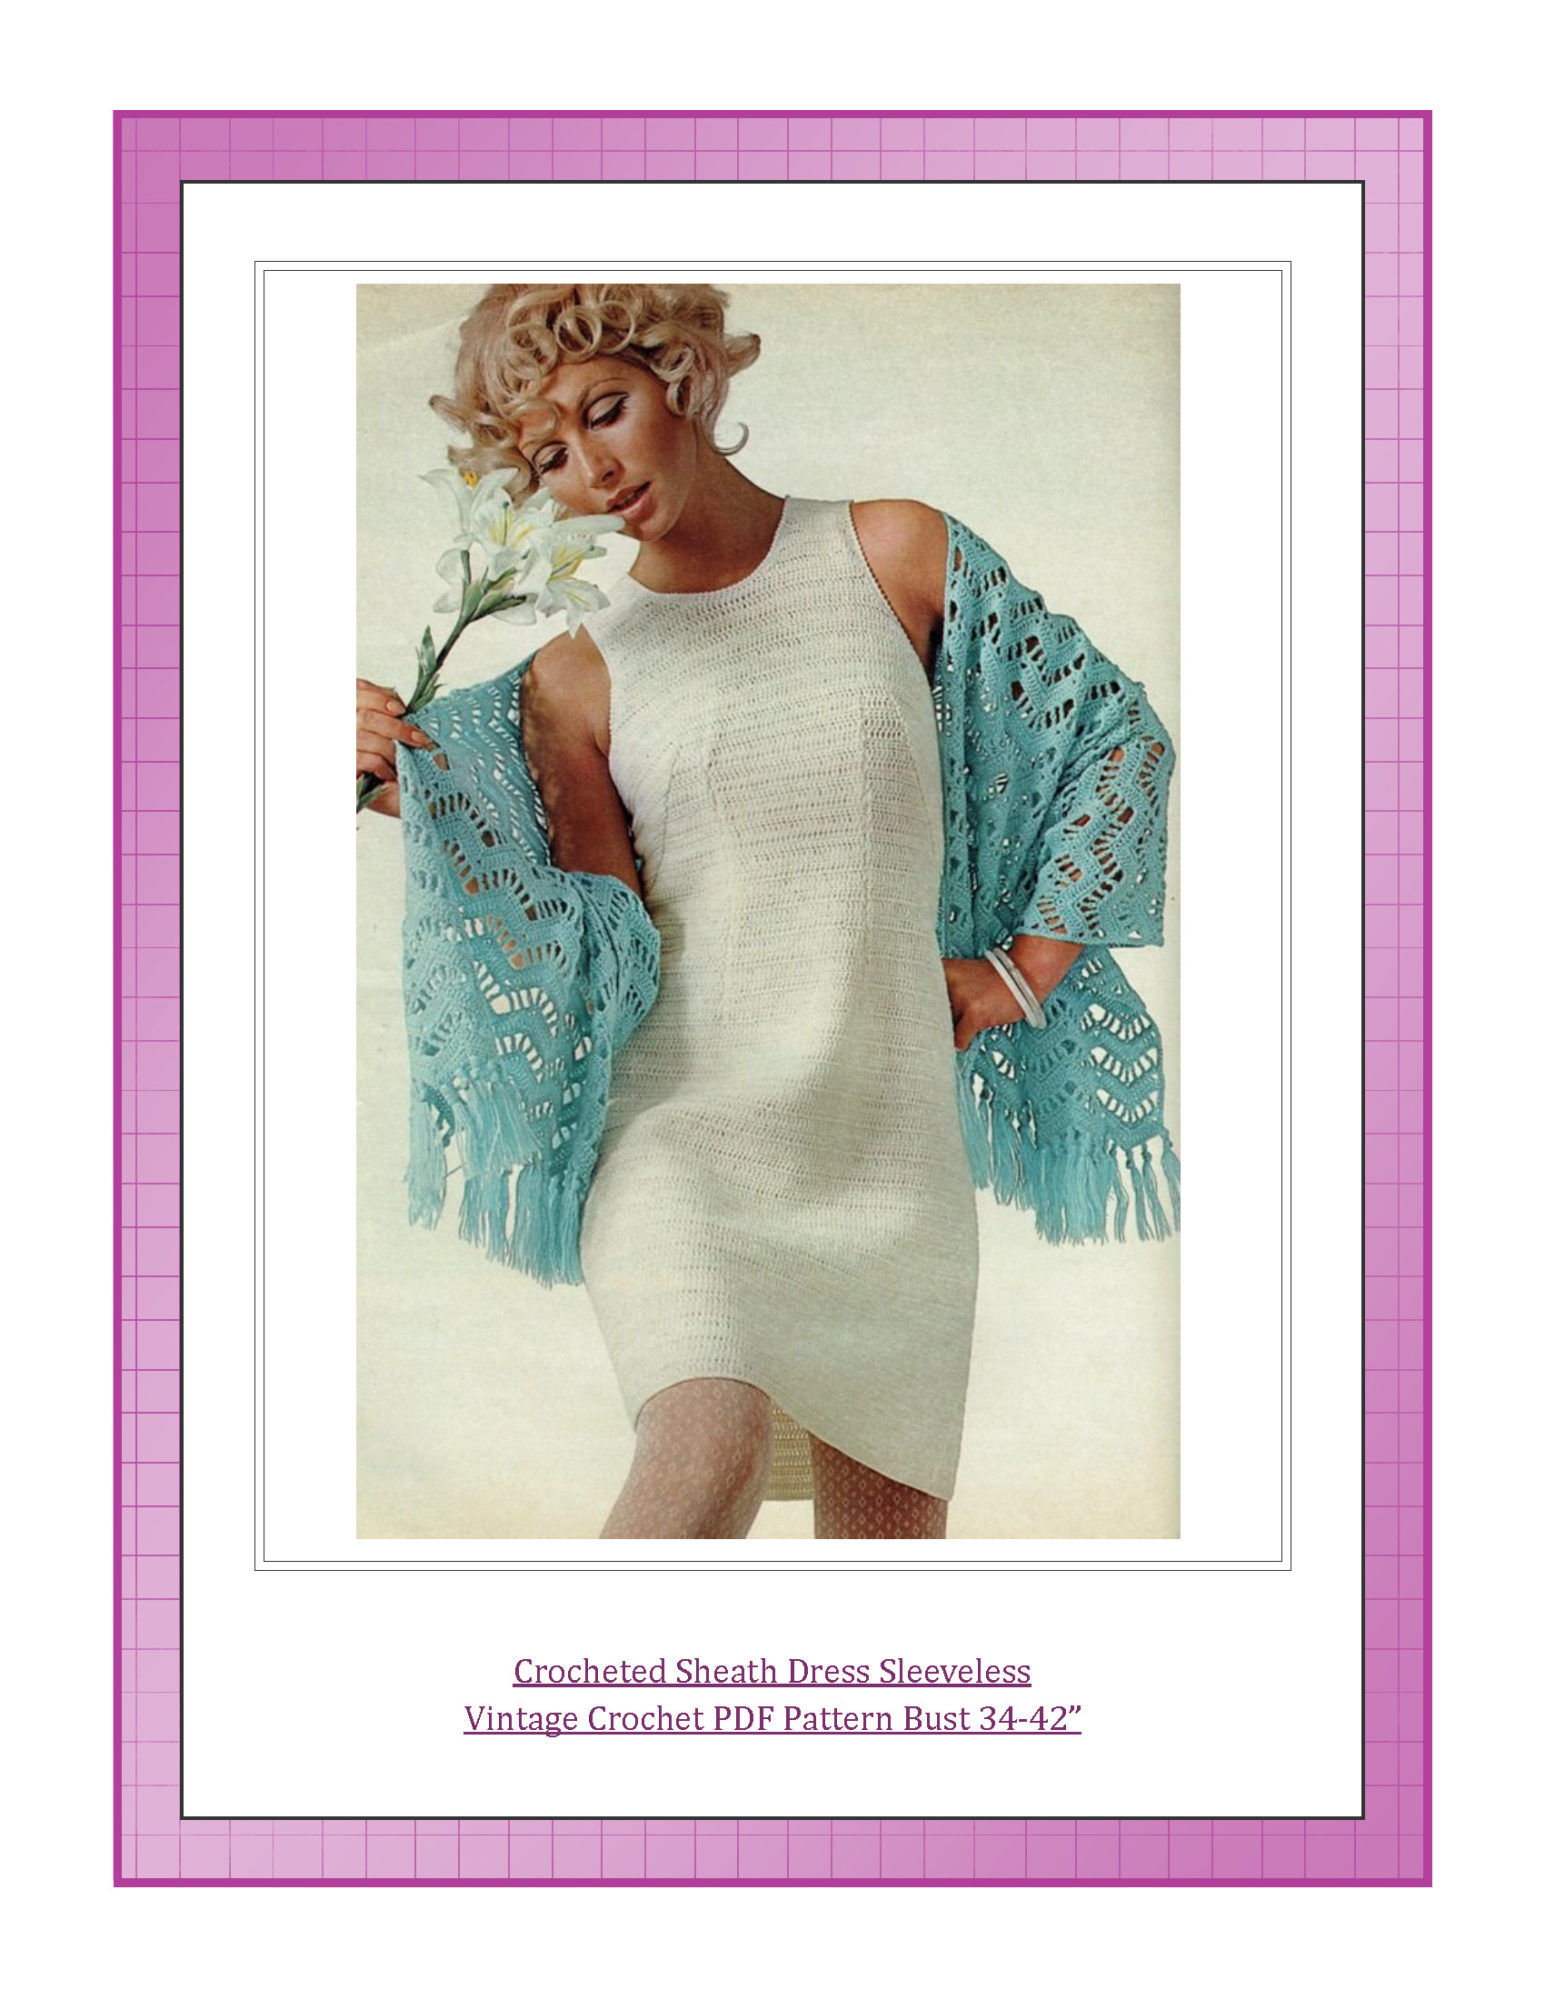 Crocheted Sheath Dress Sleeveless Vintage Crochet PDF Pattern Bust 34-42”